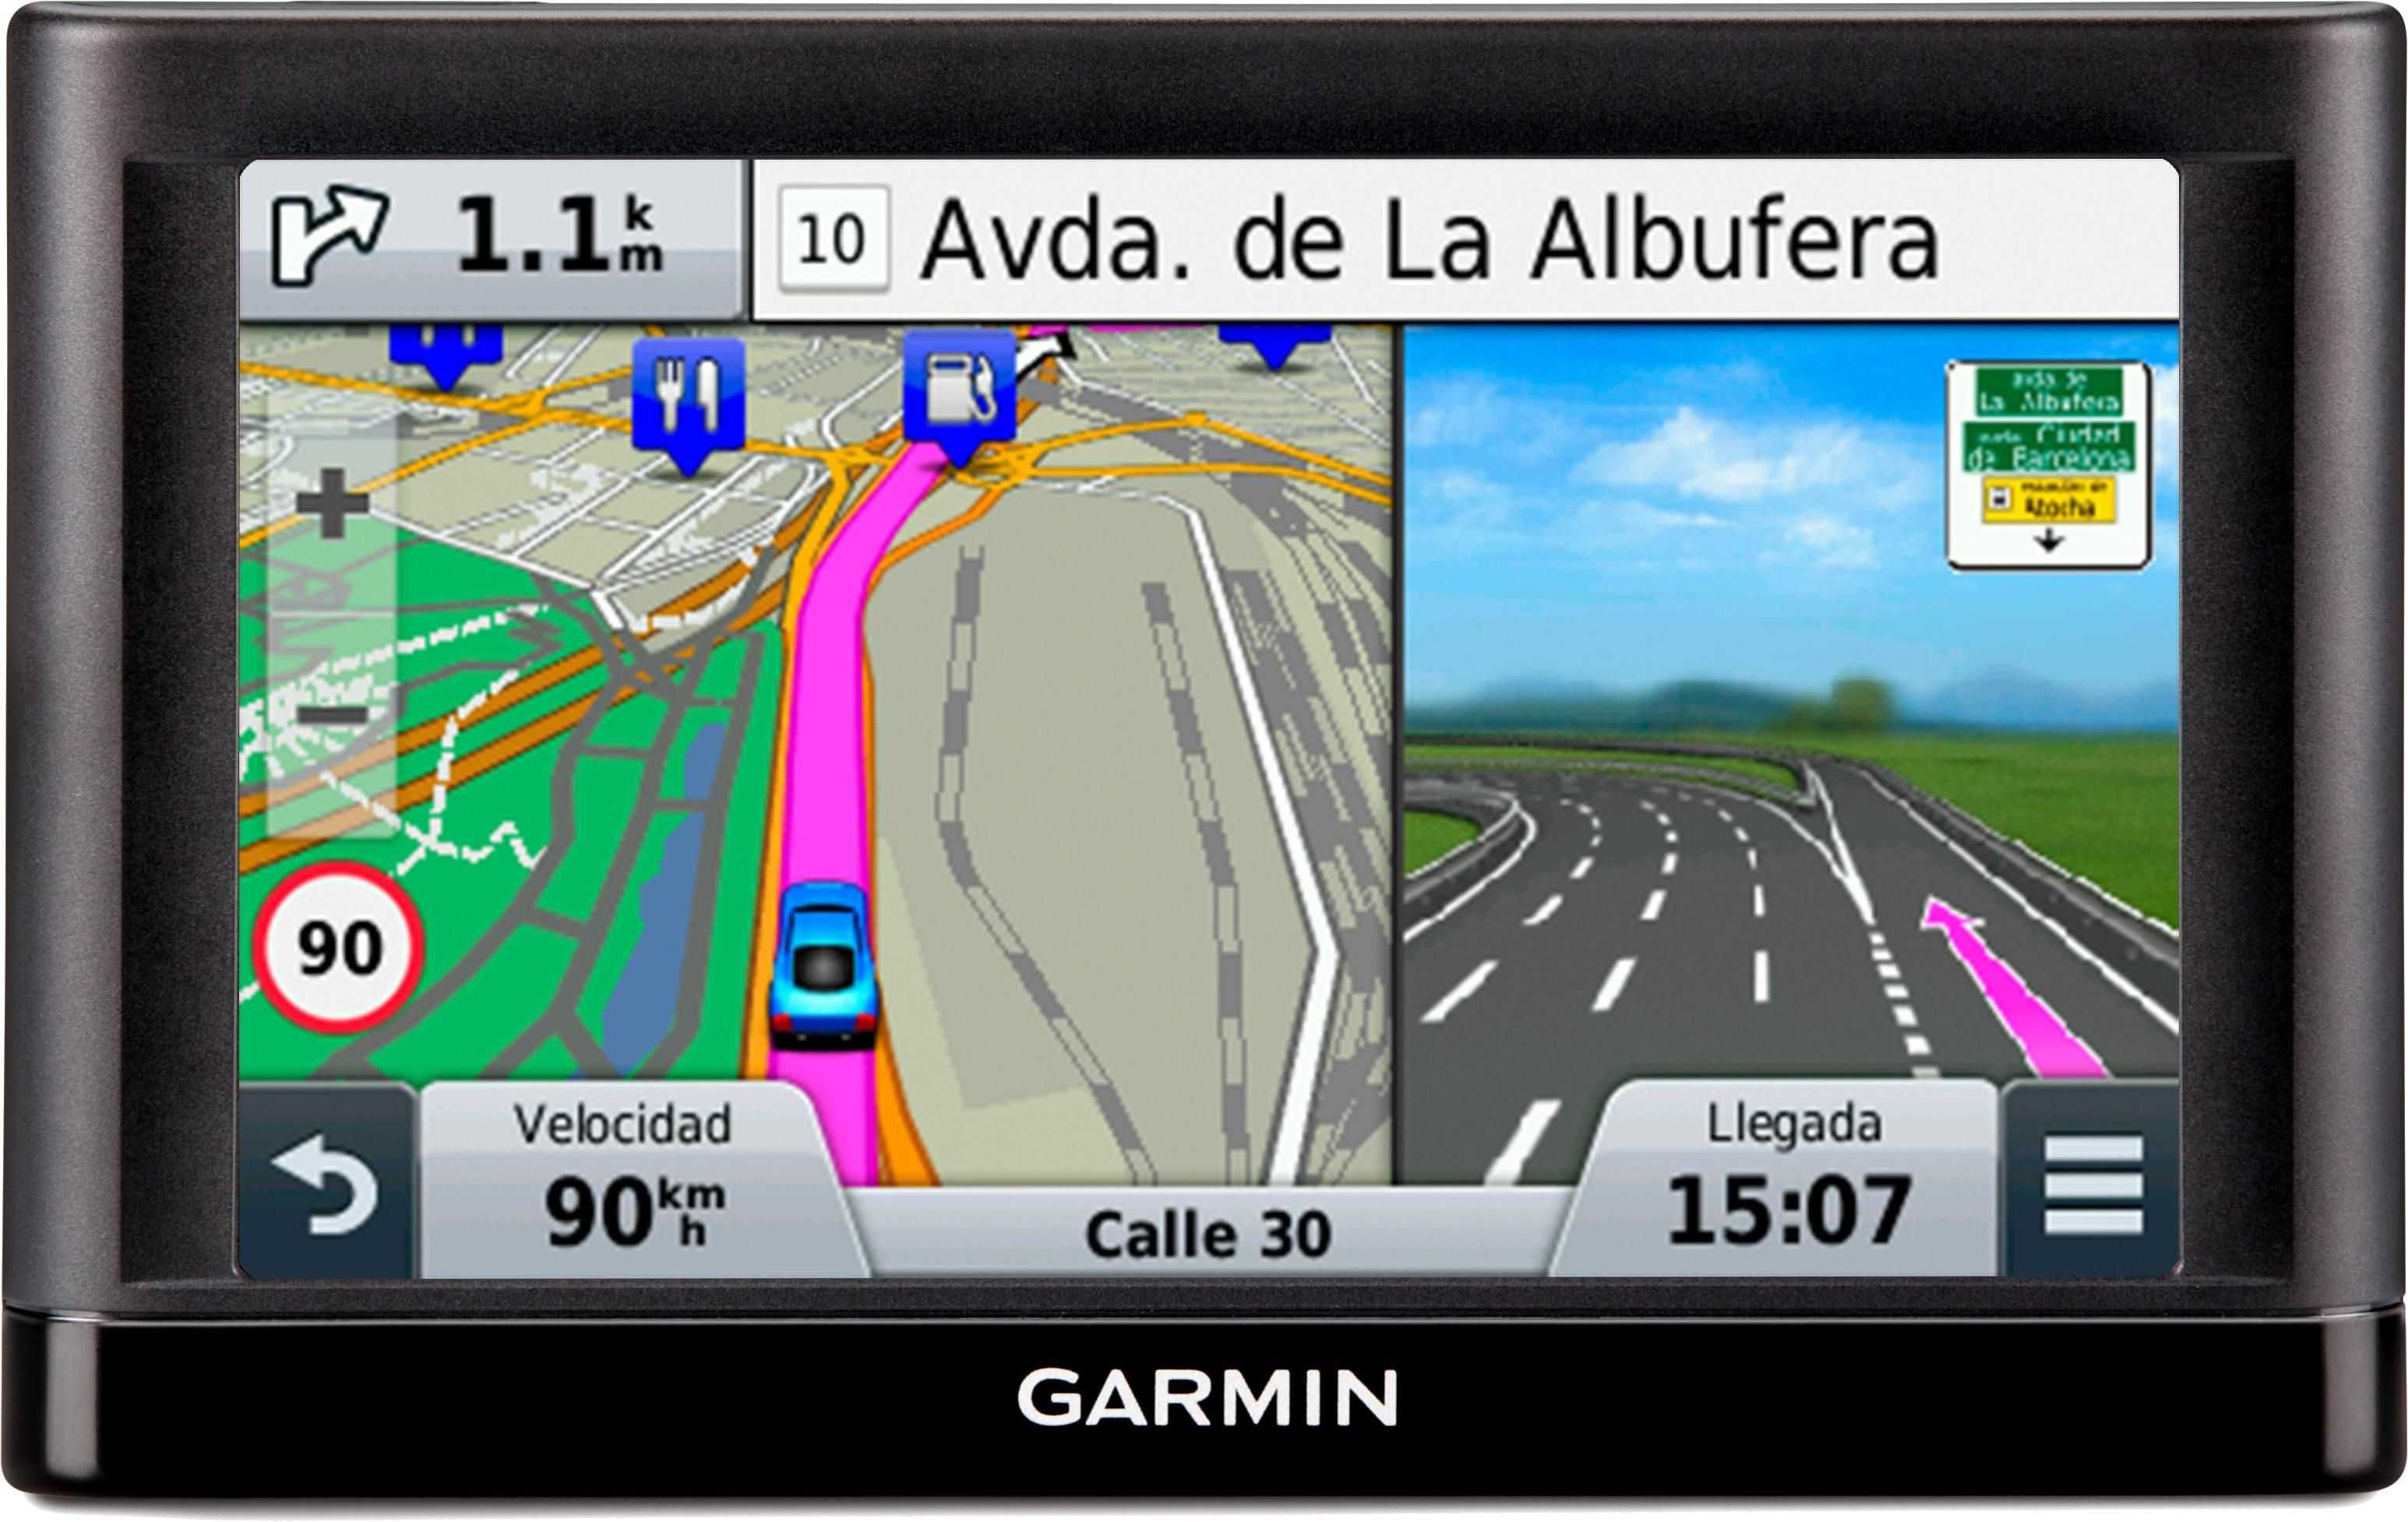 Vand Samsung Tab cu GPS. Instalez GPS pe tableta. Reactualizez GPS.